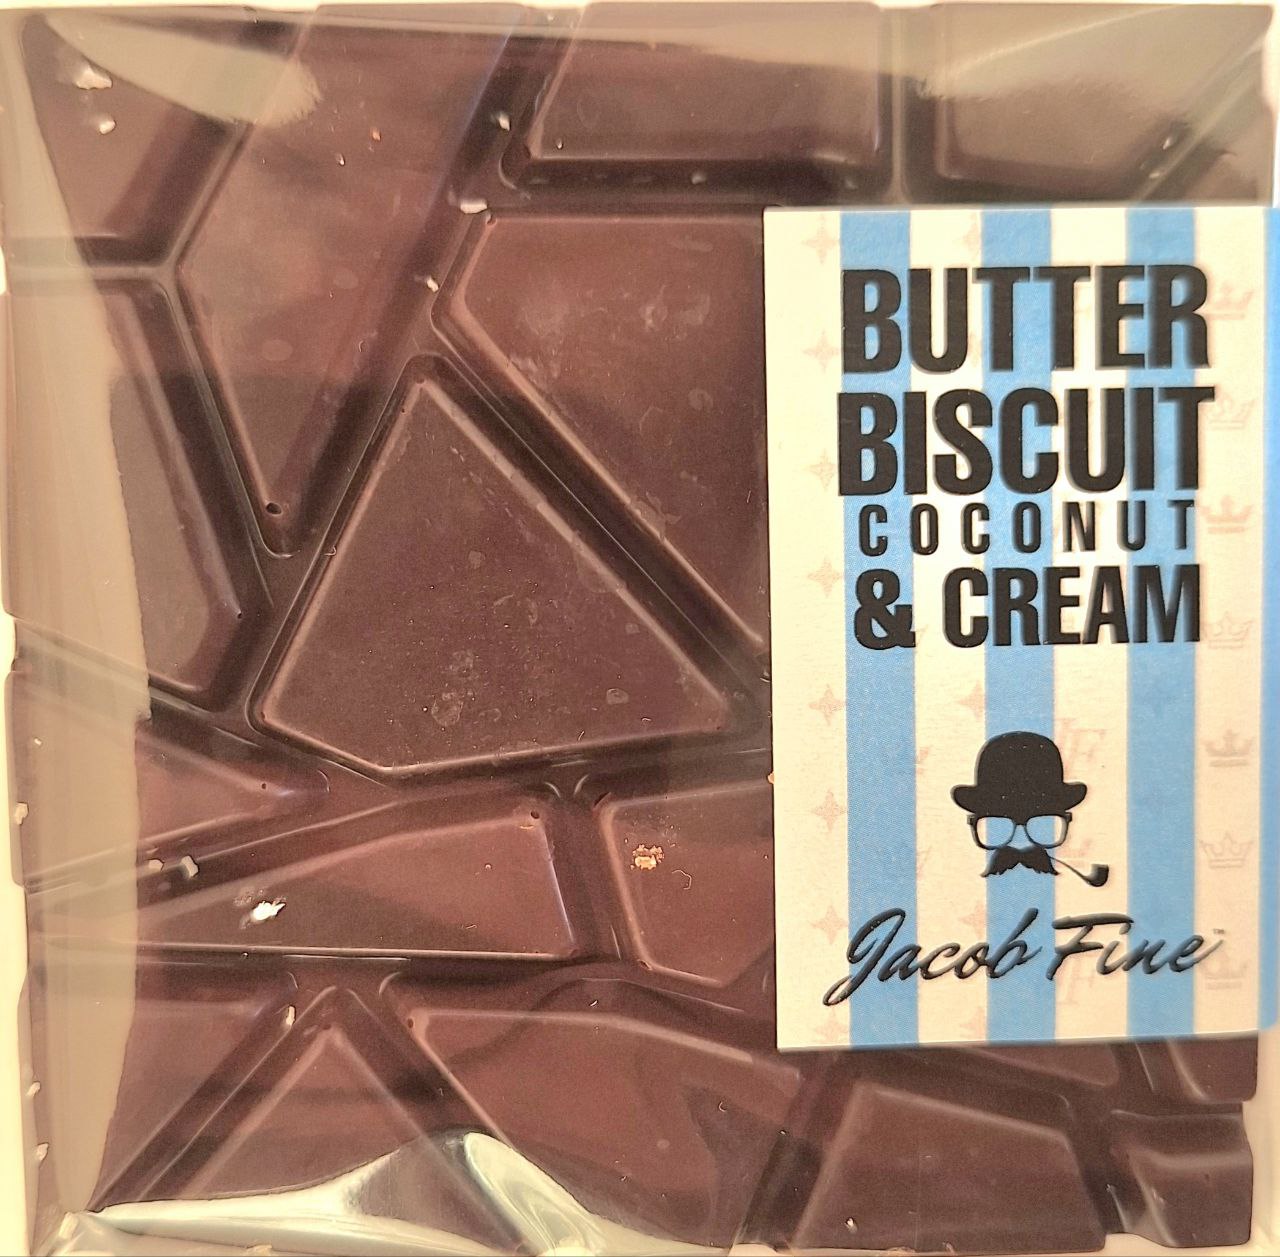 Premium Dark Chocolate & Butter Biscuit Coconut Cream EU